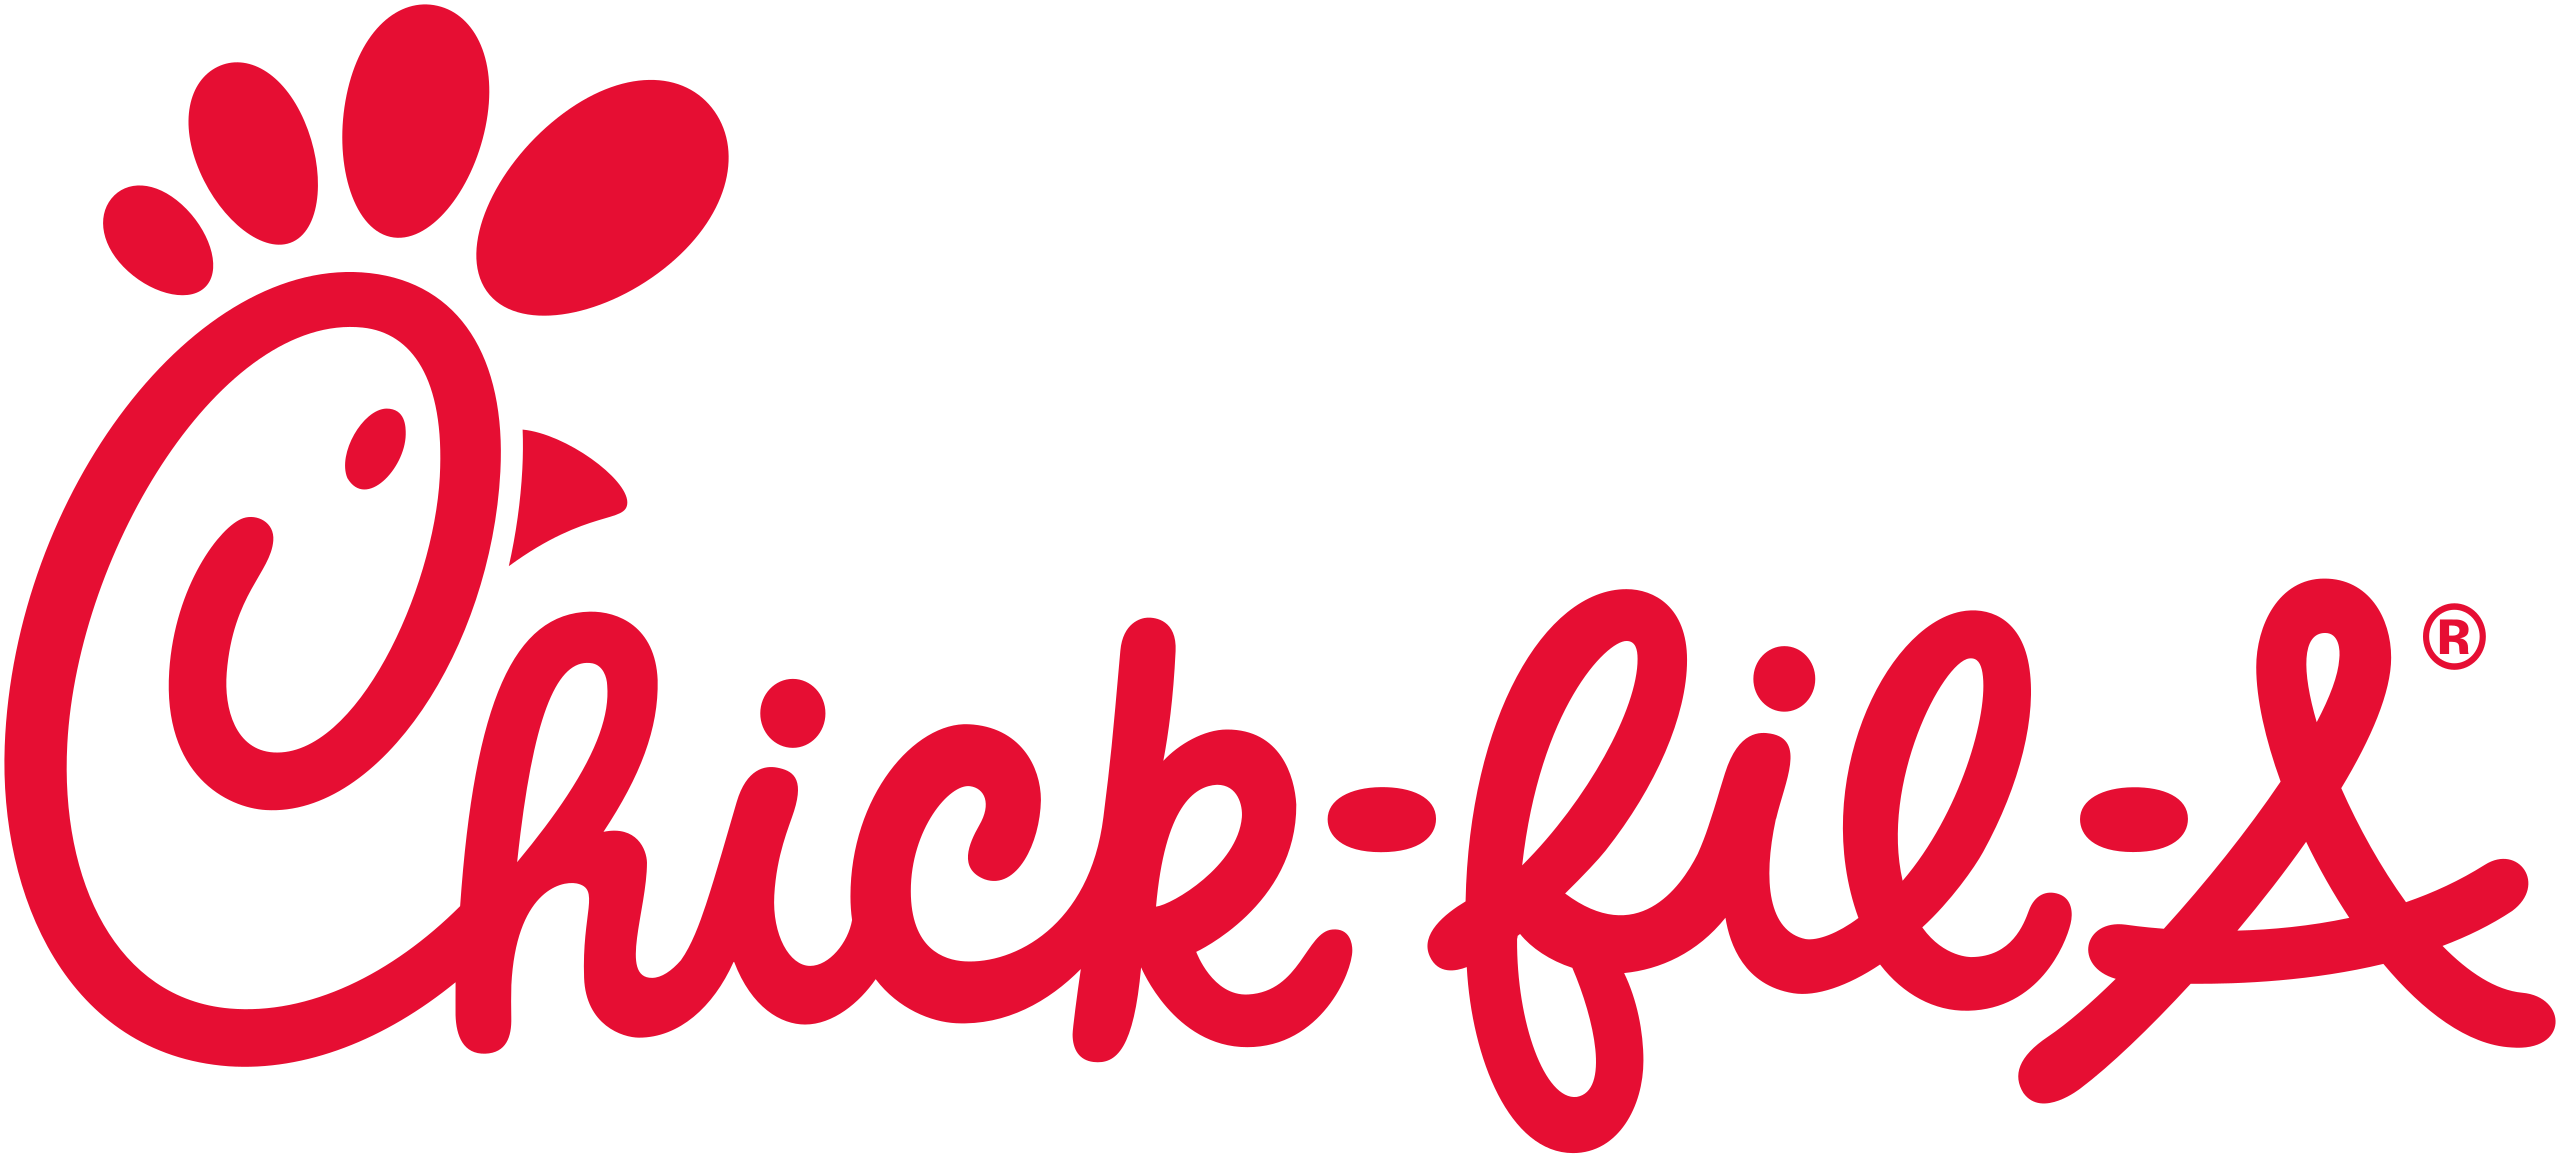 Chick Fil A Logo Design Bird